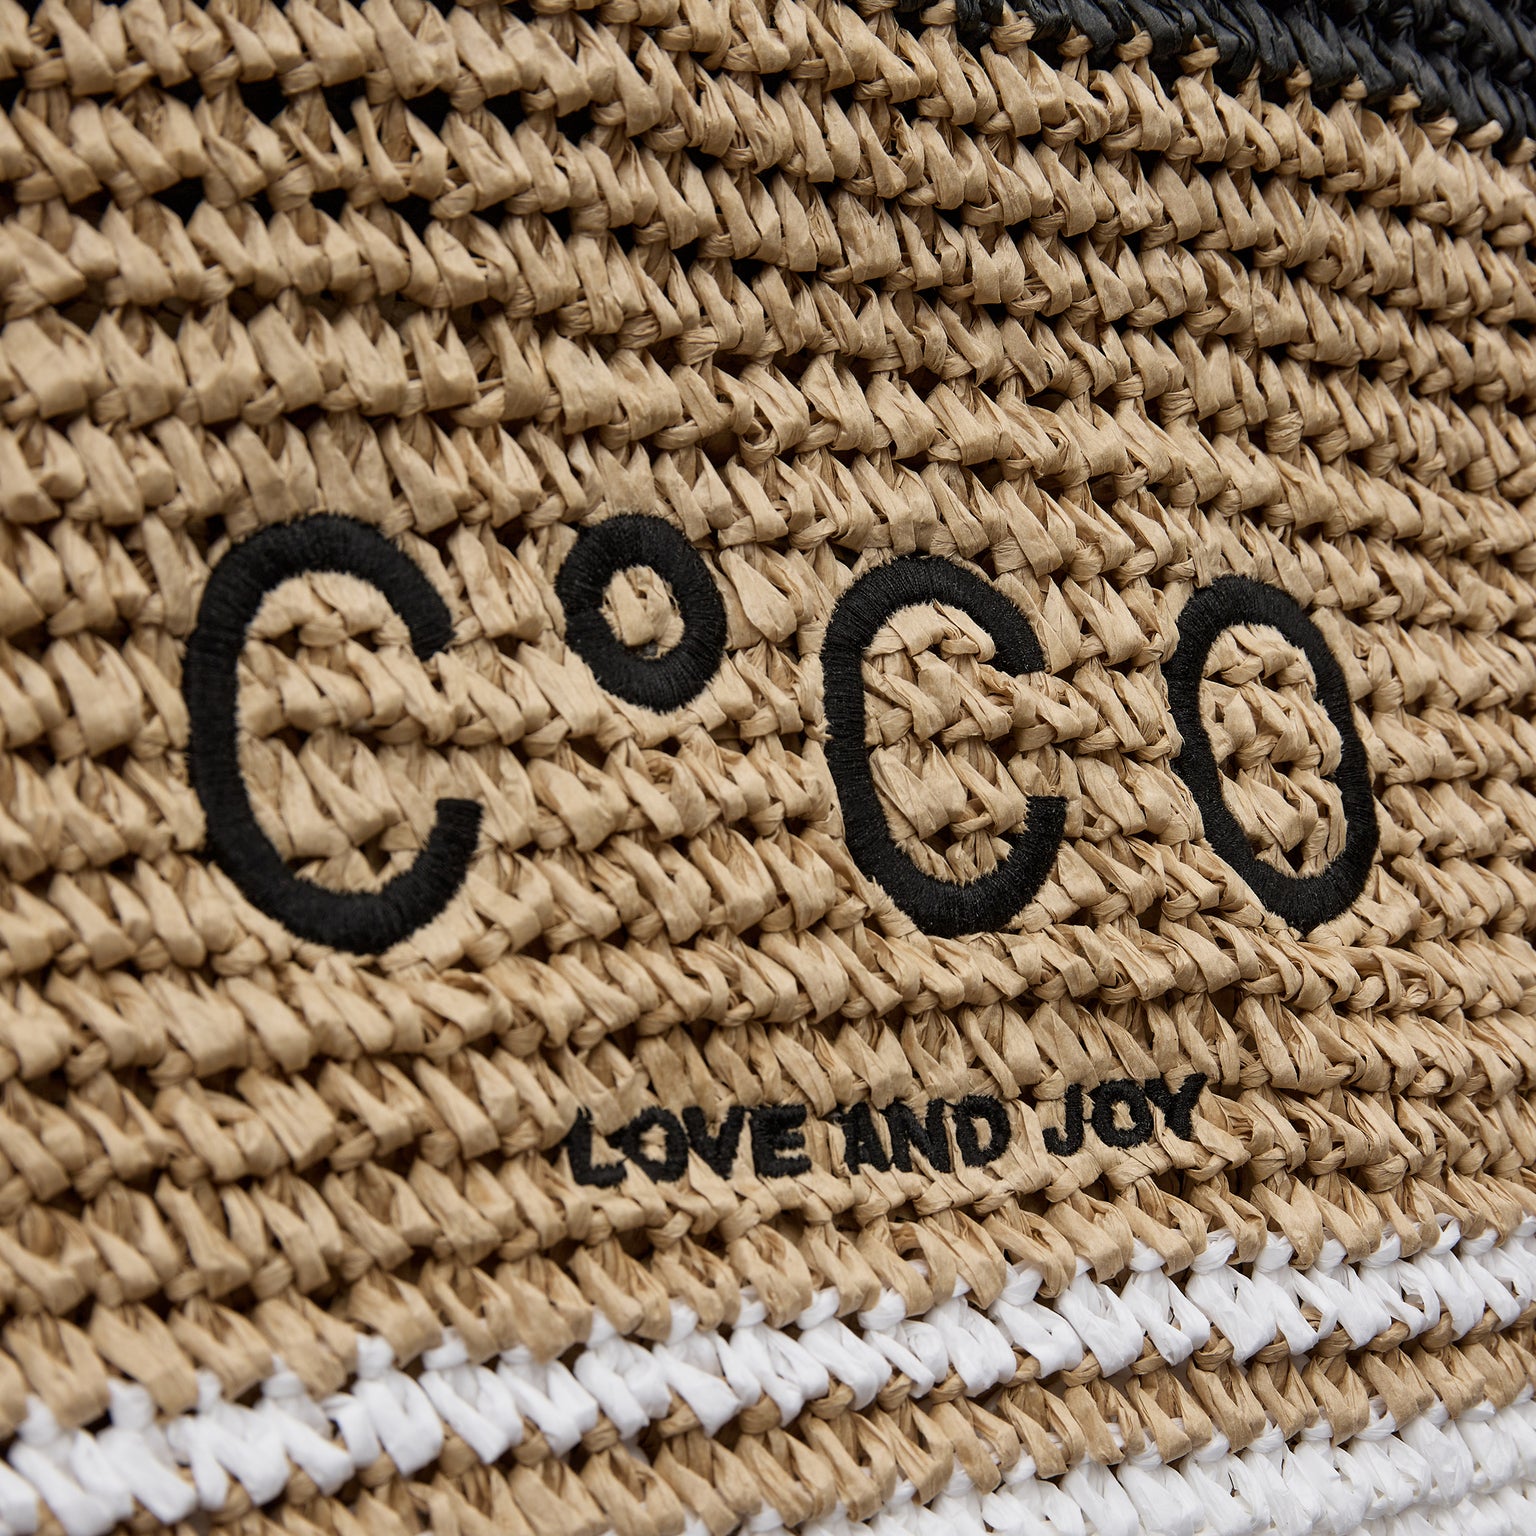 Cococc Straw Bag - Straw